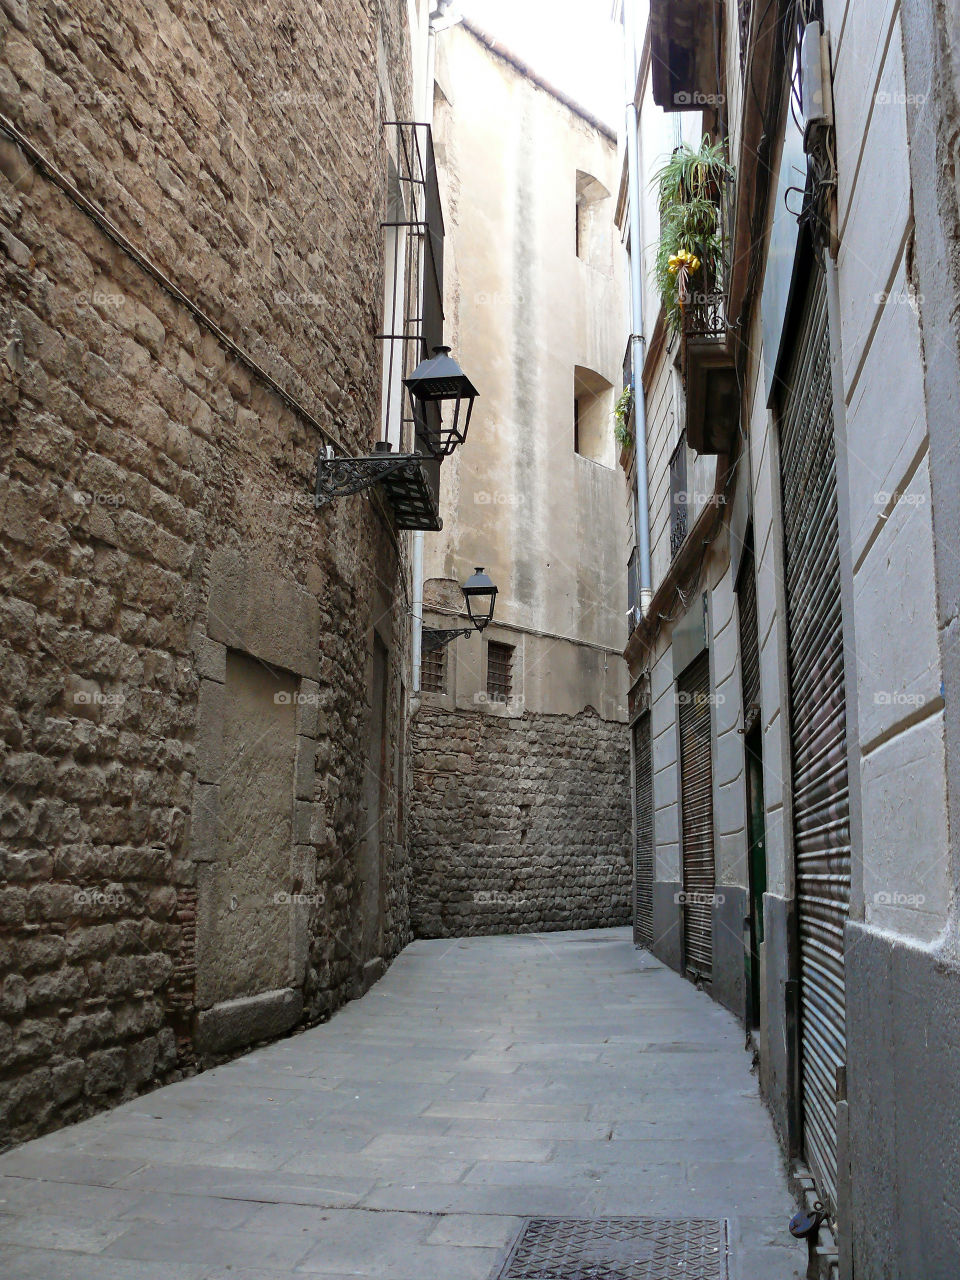 Alley amidst buildings in Barcelona, Spain.